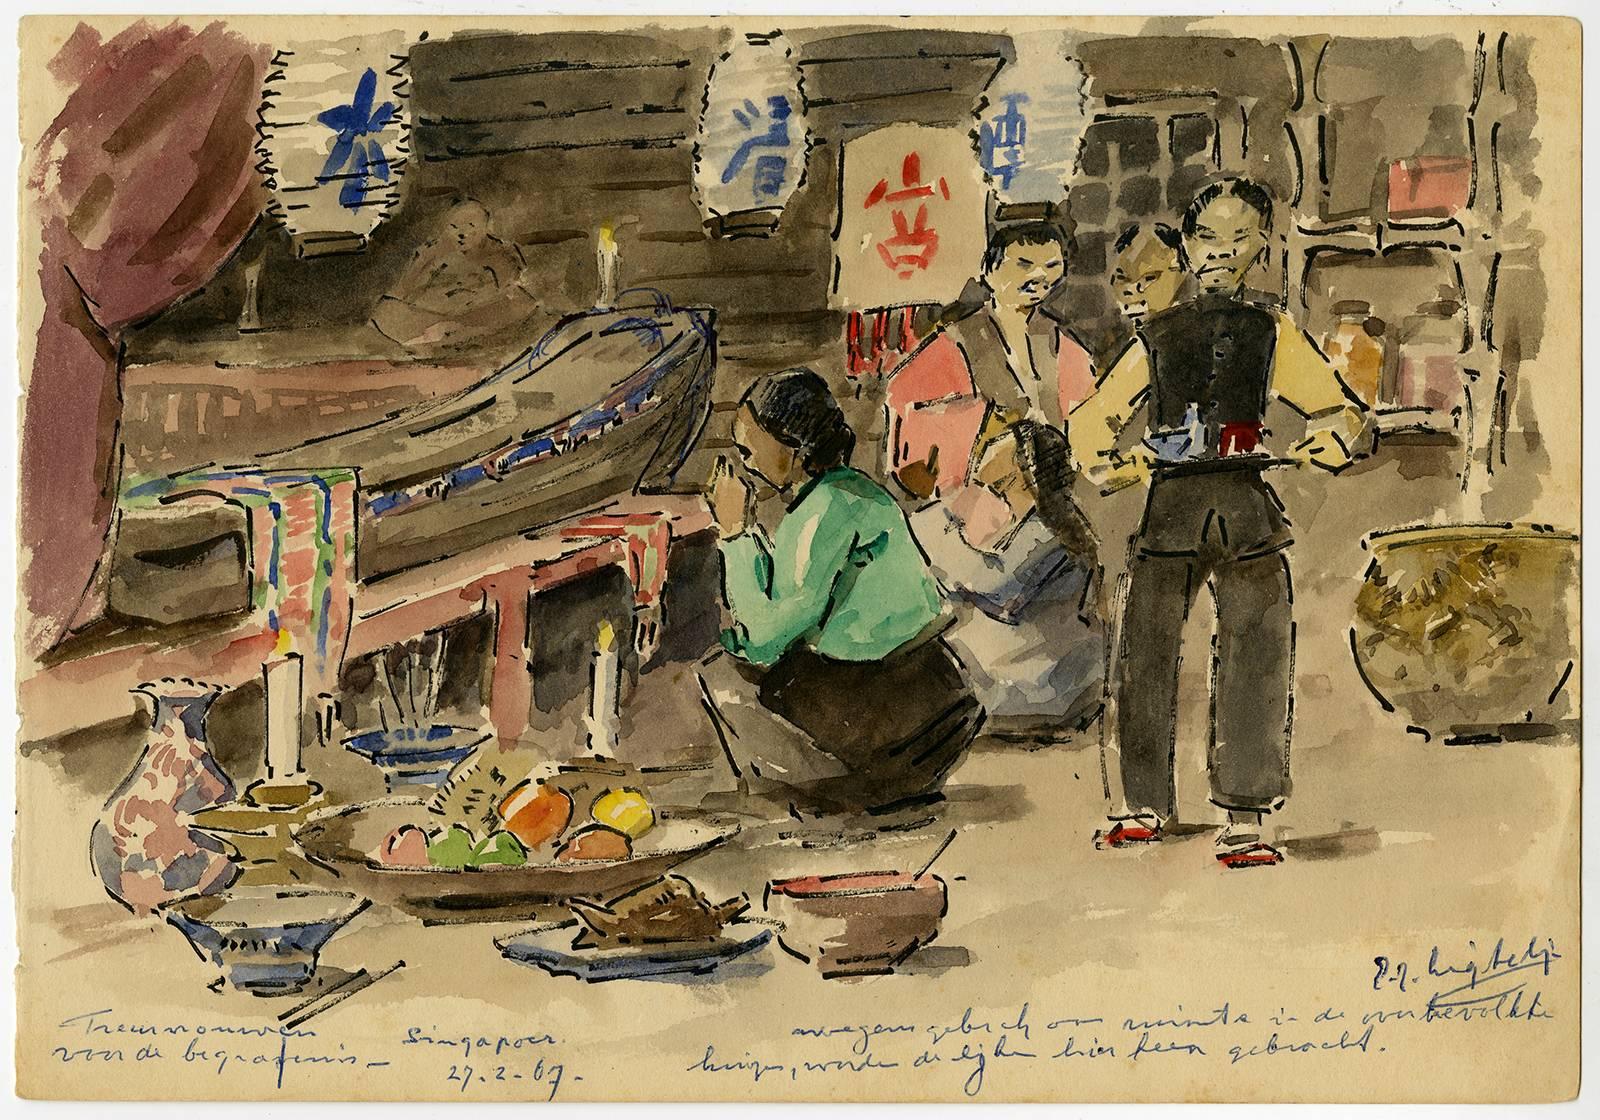 Evert Jan Ligtelijn Figurative Art – Chinese begrafenis. Singapoer. 27-2-67.